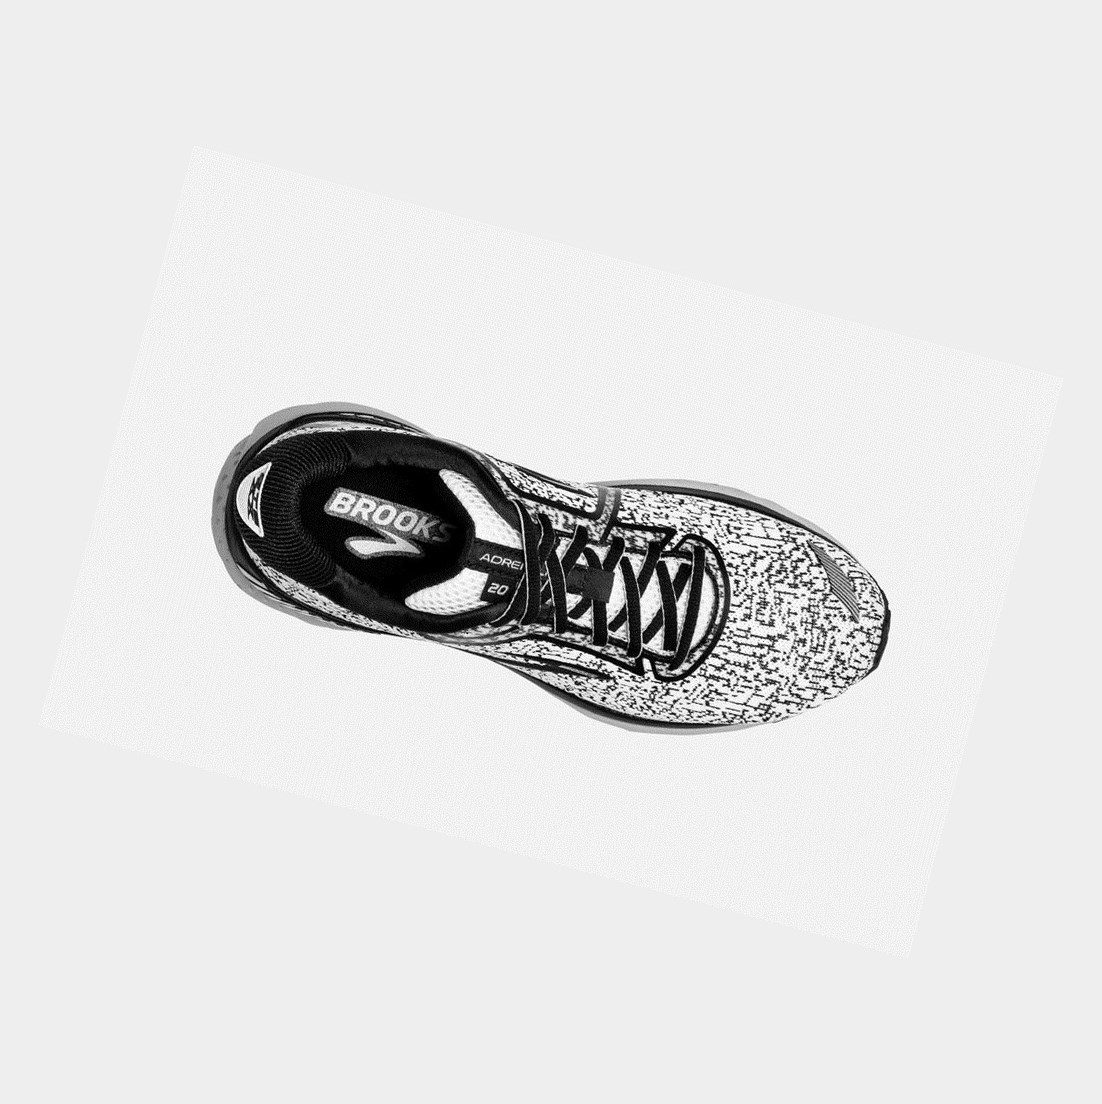 Brooks Adrenaline GTS 20 Men's Walking Shoes White / Black / Grey | ORNZ-60534